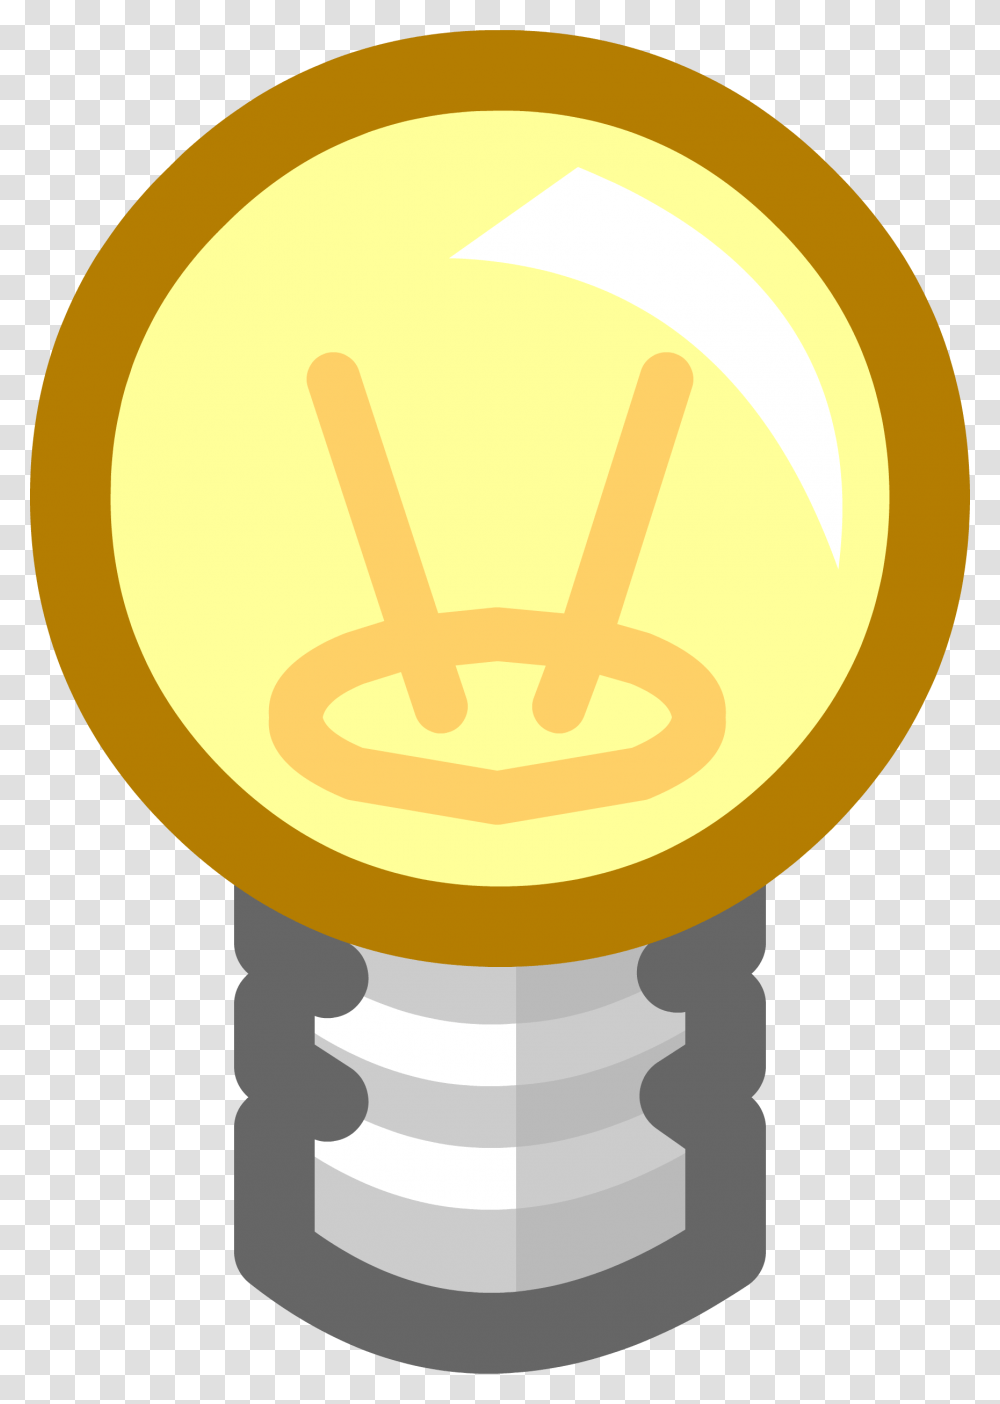 Club Penguin Rewritten Wiki Club Penguin Light Bulb Emoji, Lighting, Lightbulb Transparent Png